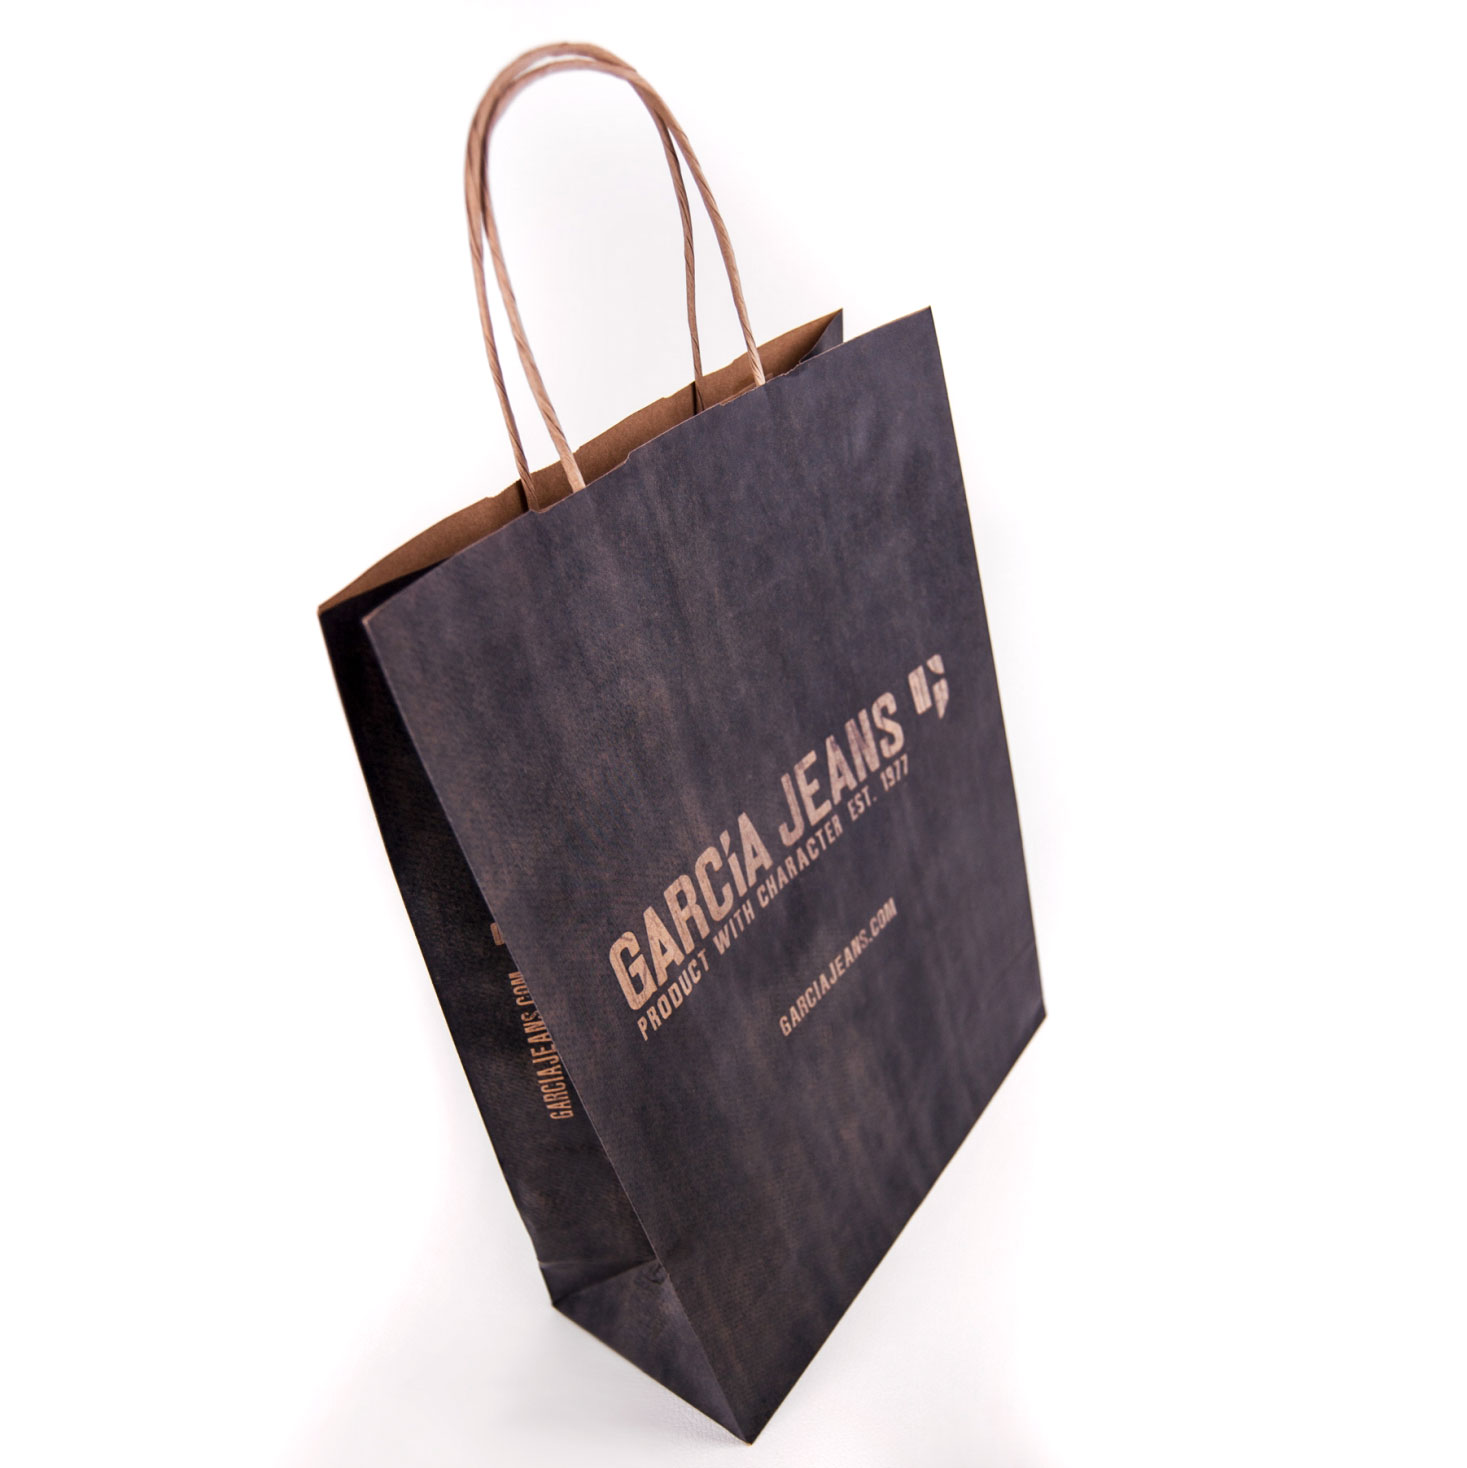 Gallery Shopping Bag